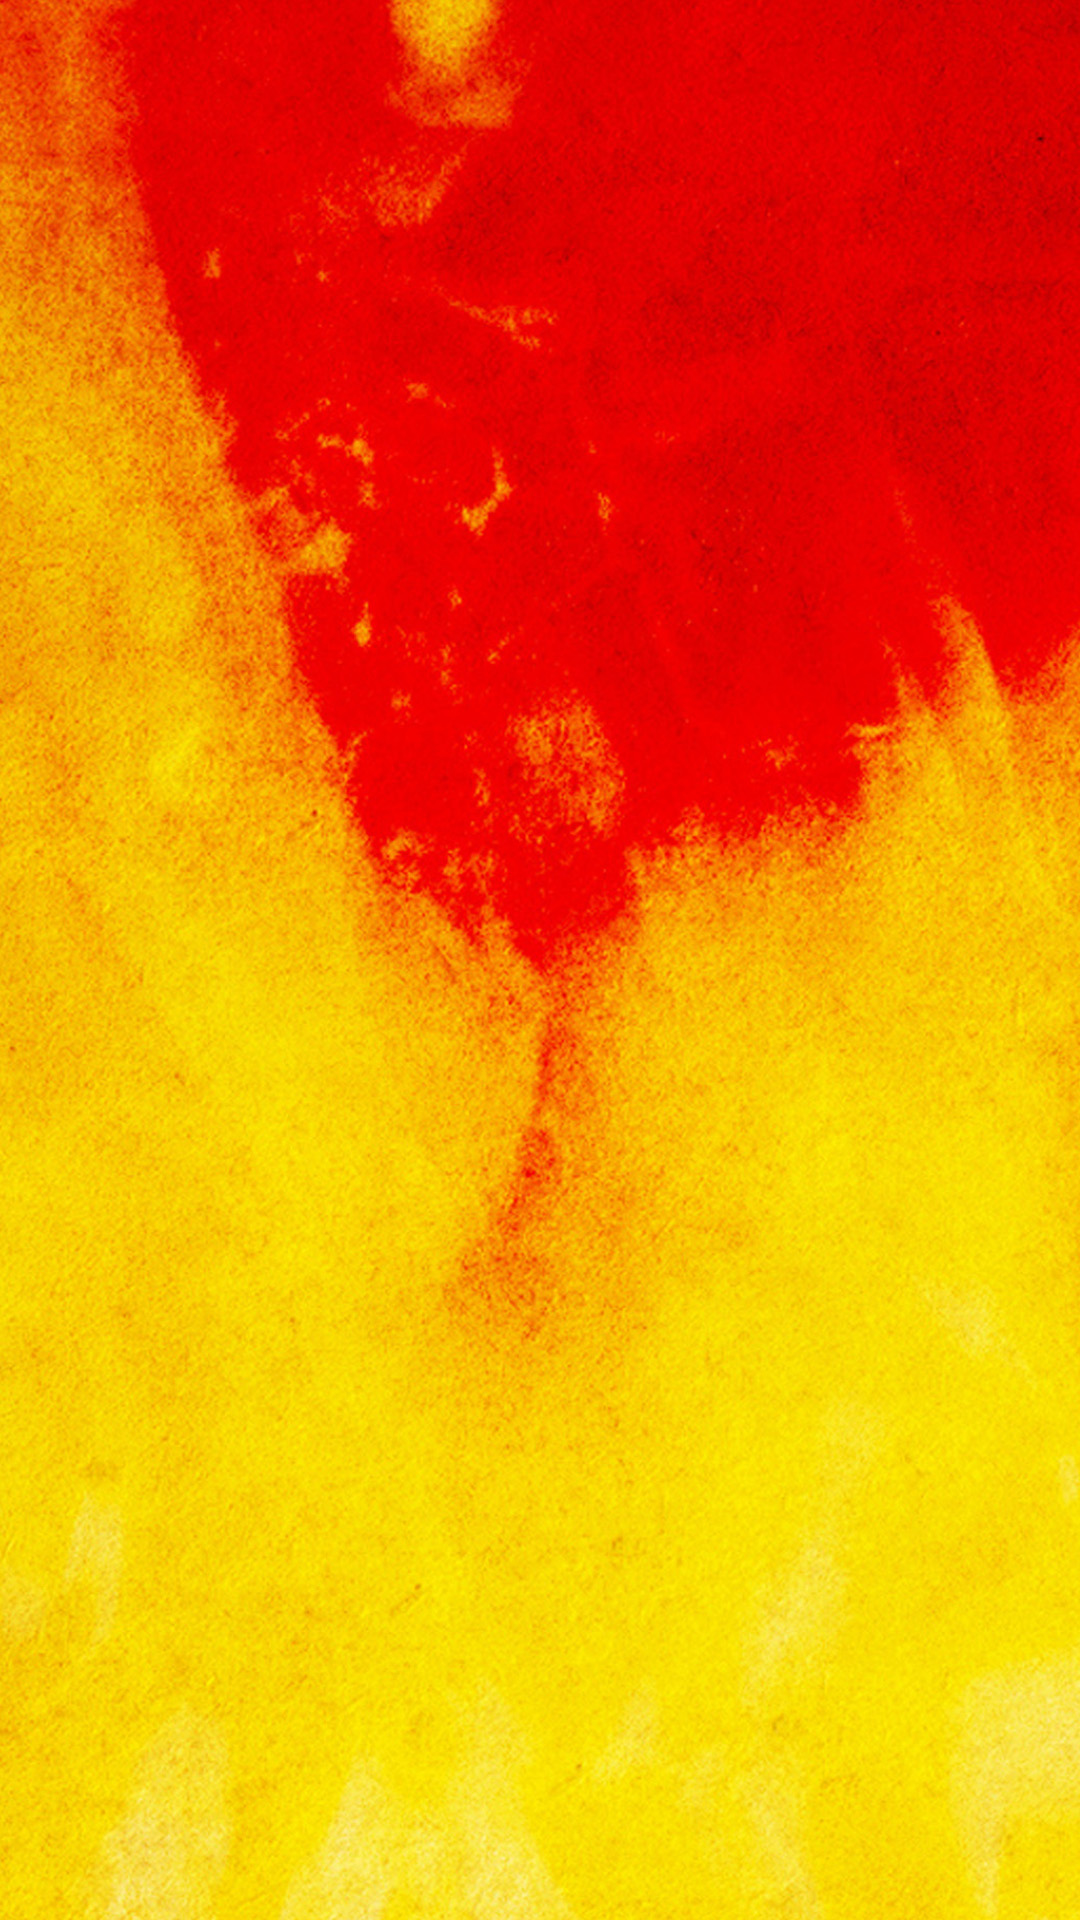 htc m8 wallpaper,red,orange,yellow,geological phenomenon,watercolor paint